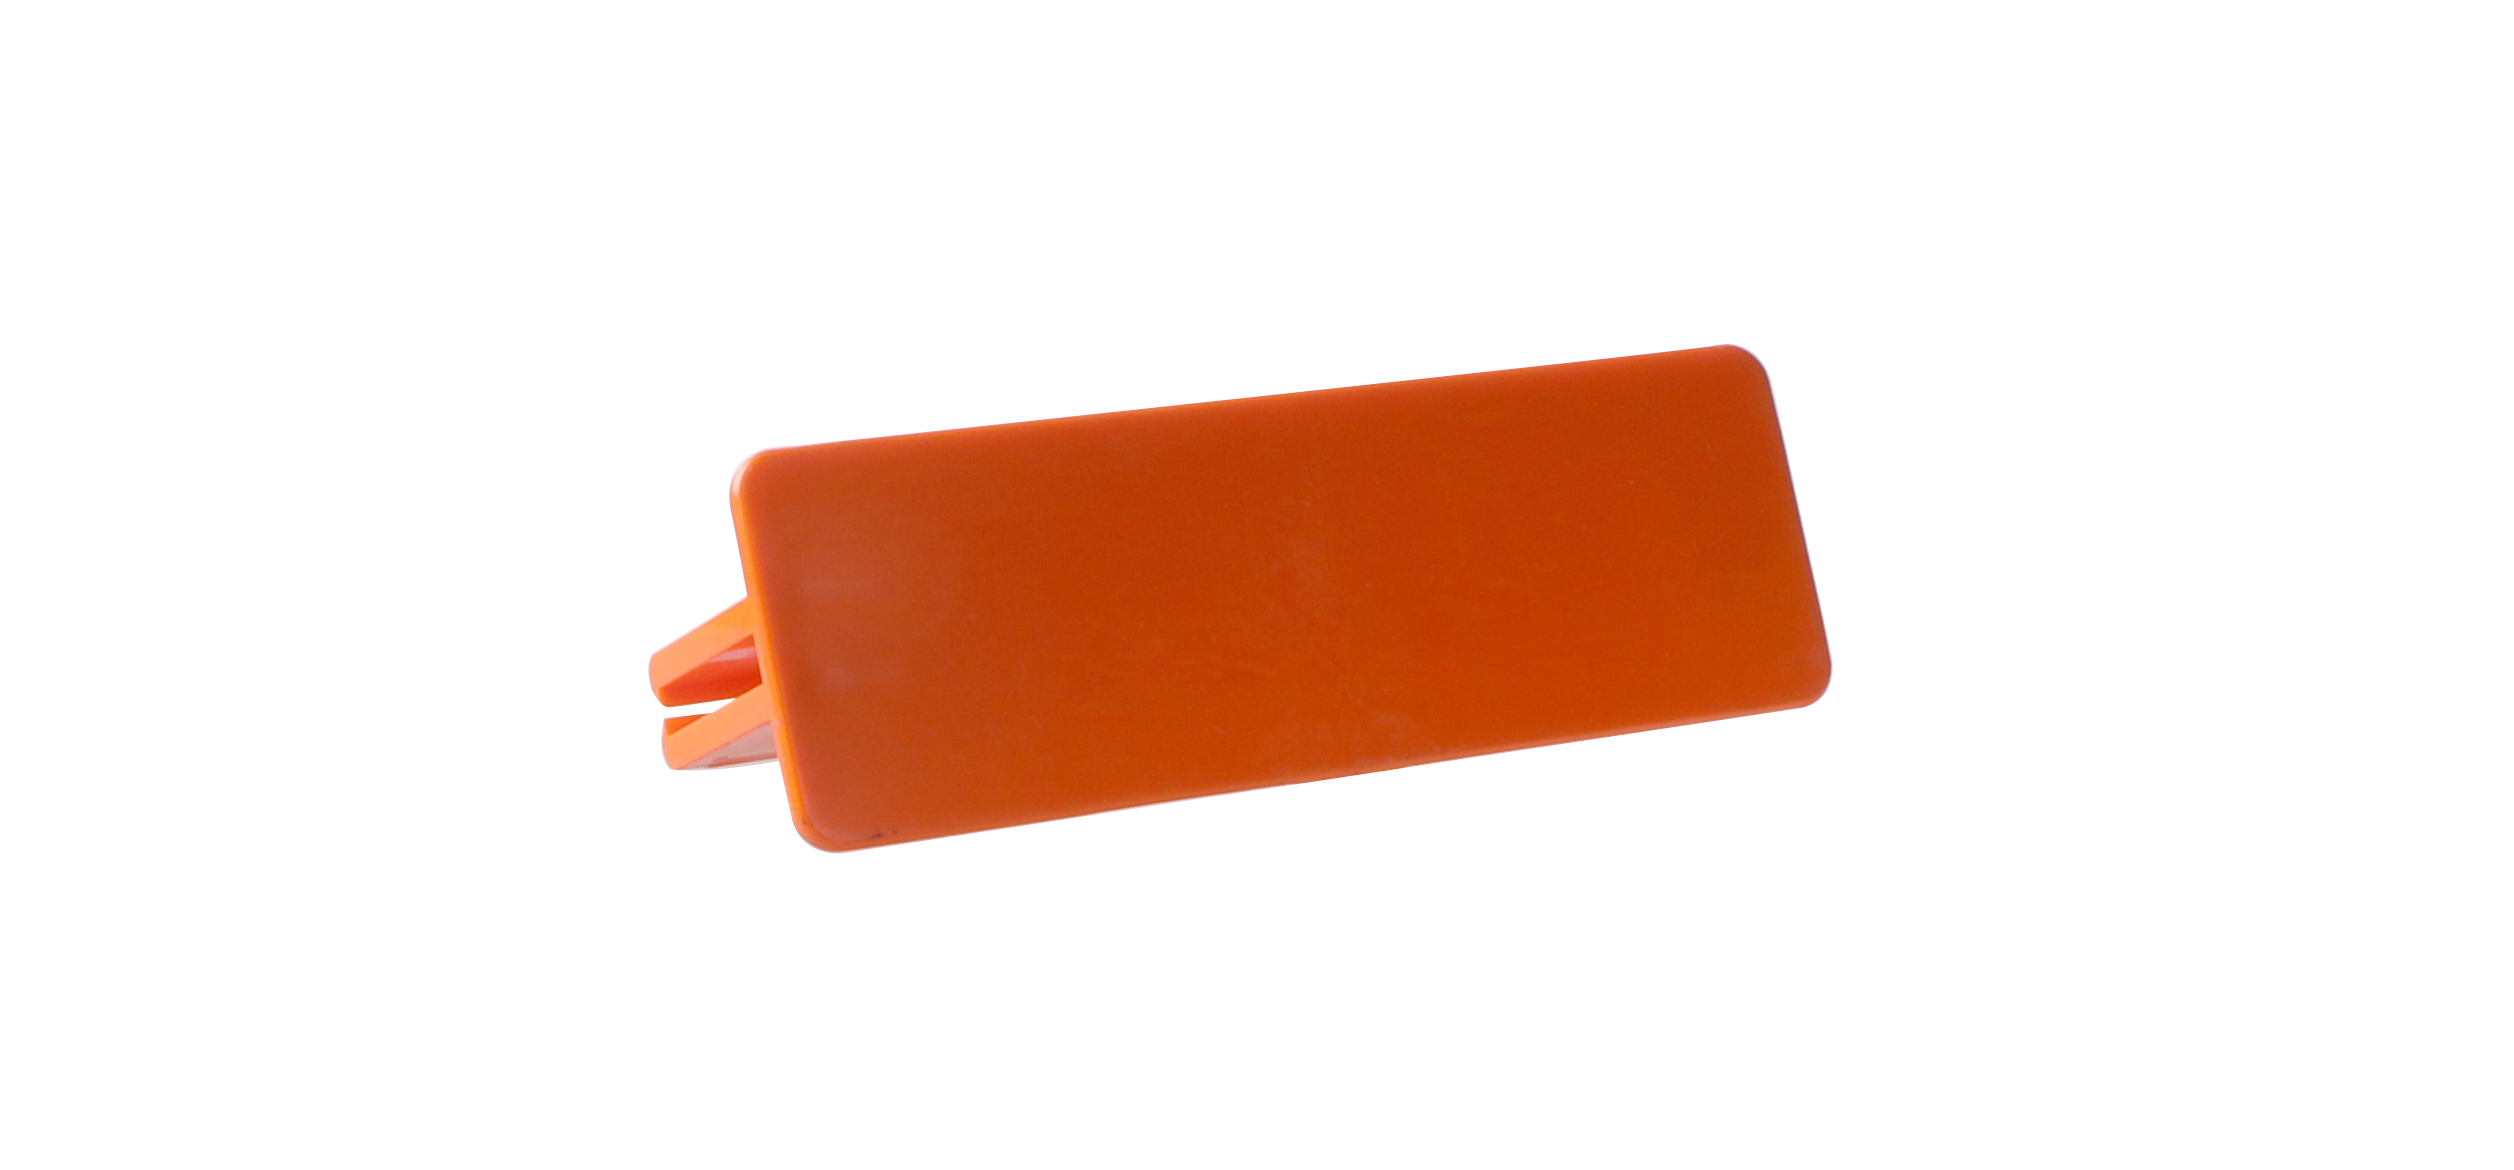 Carilsle Clip für Gläserkorb orange